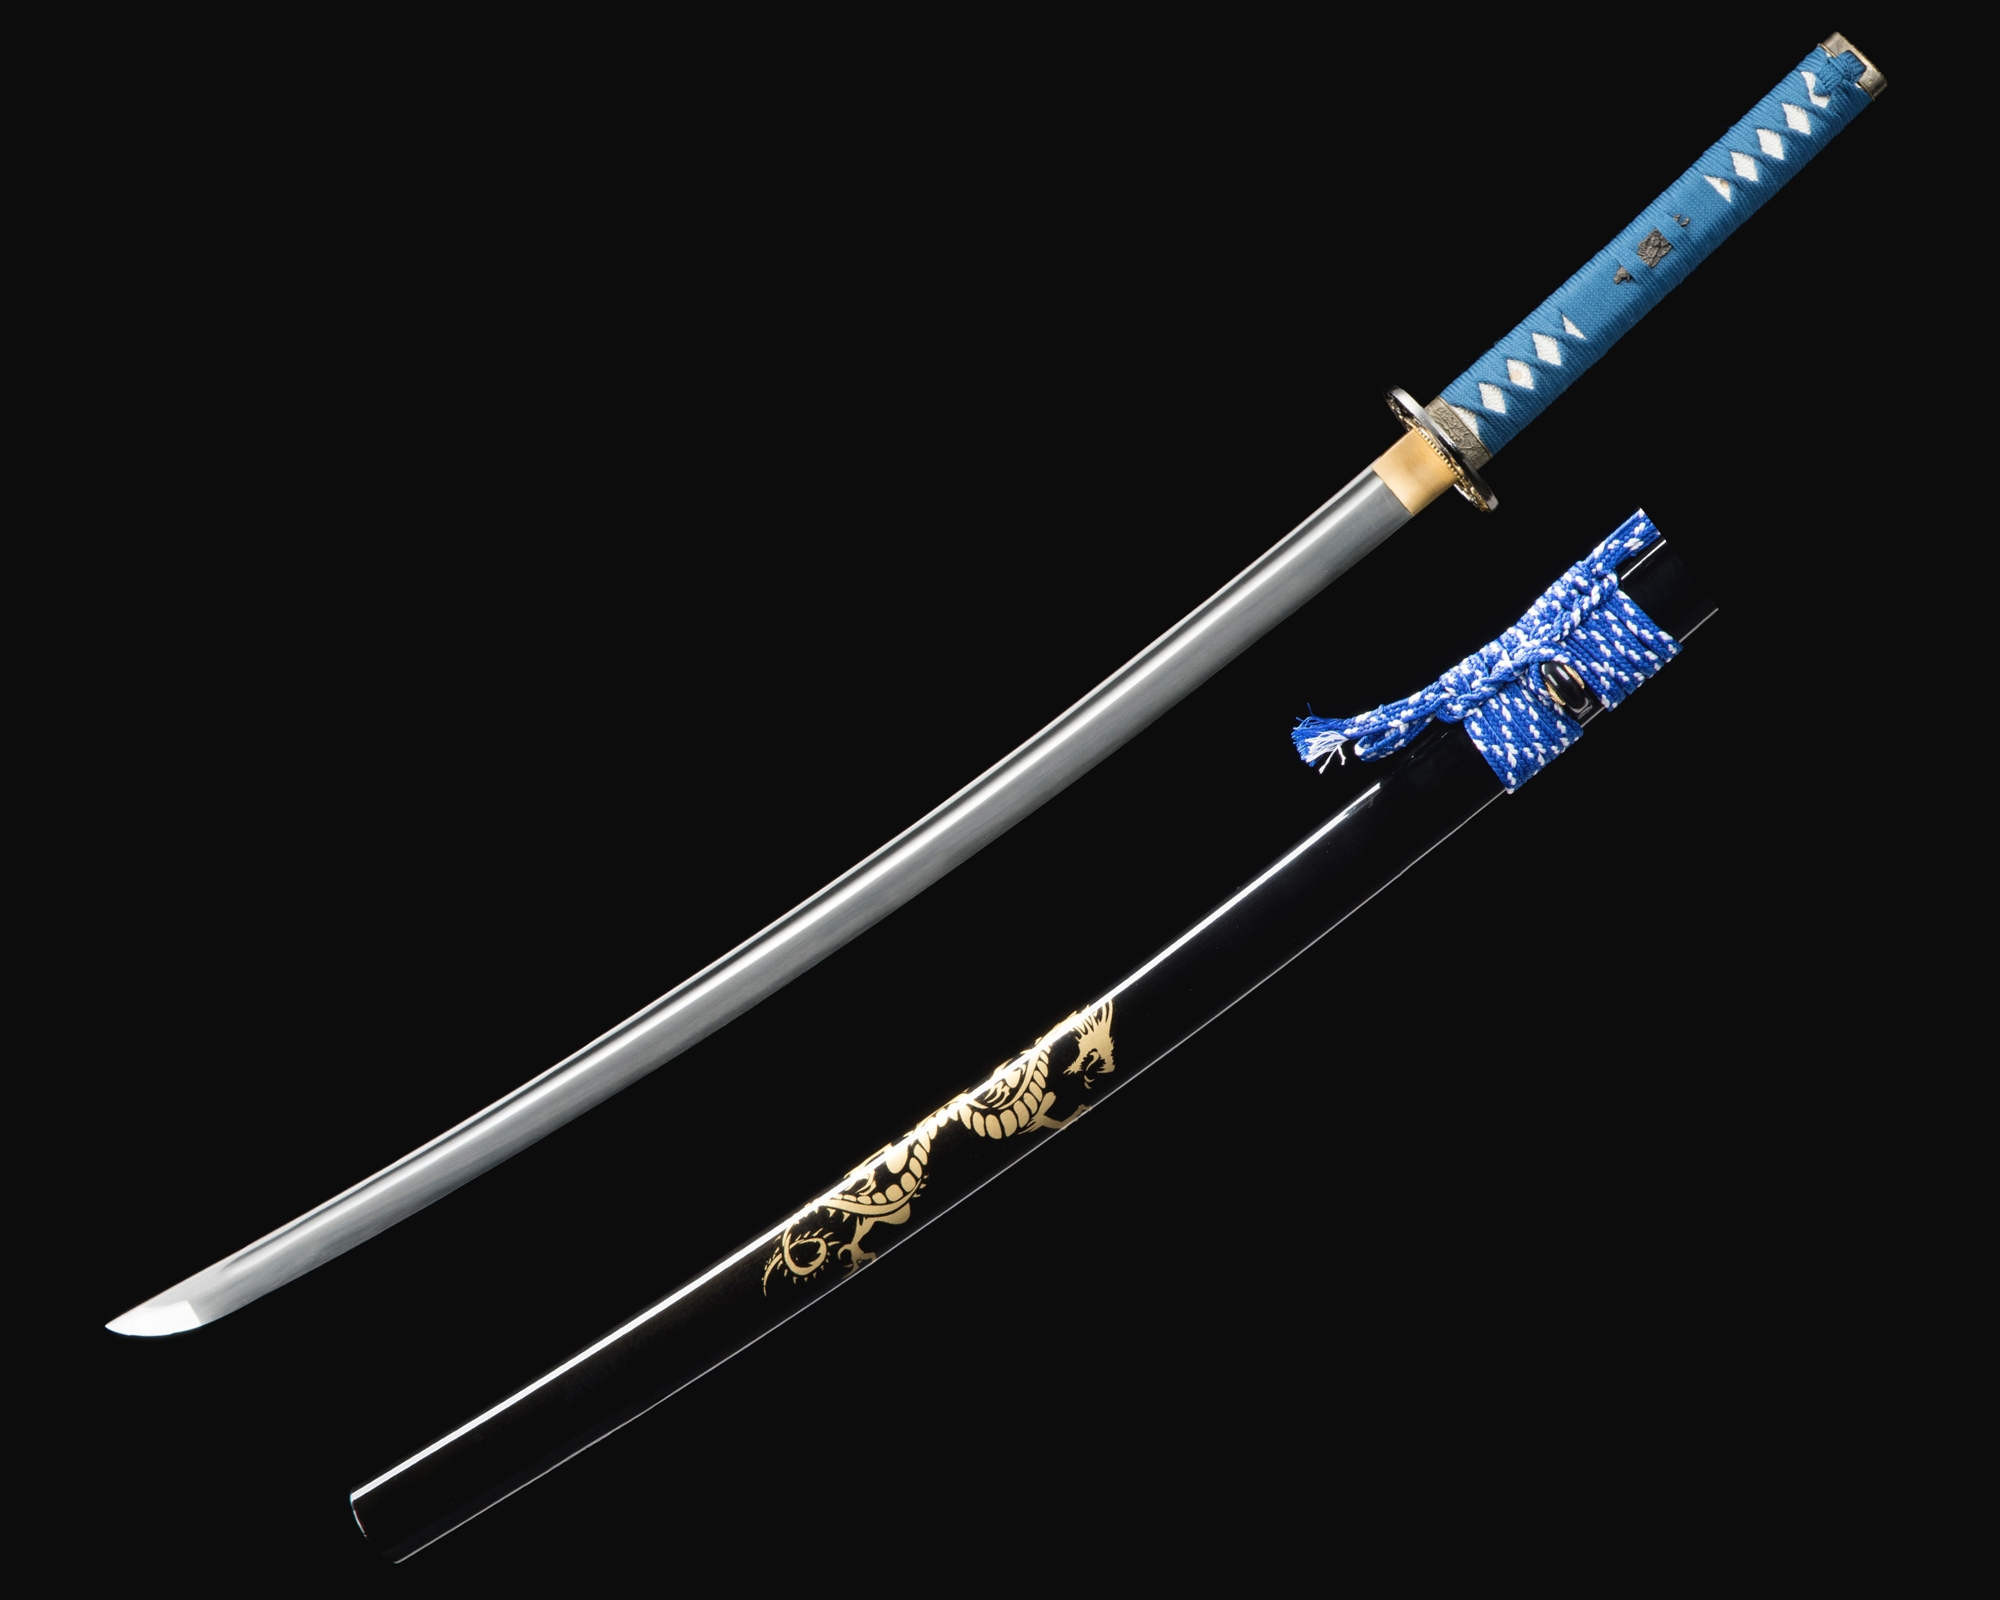  Muramasa Katana Hand Forged 1095 High Carbon Steel Japanese  Samurai Sword Full Tang Very Sharp Knife Blade Combat Ready HERO SWORD  Handmade : Sports & Outdoors